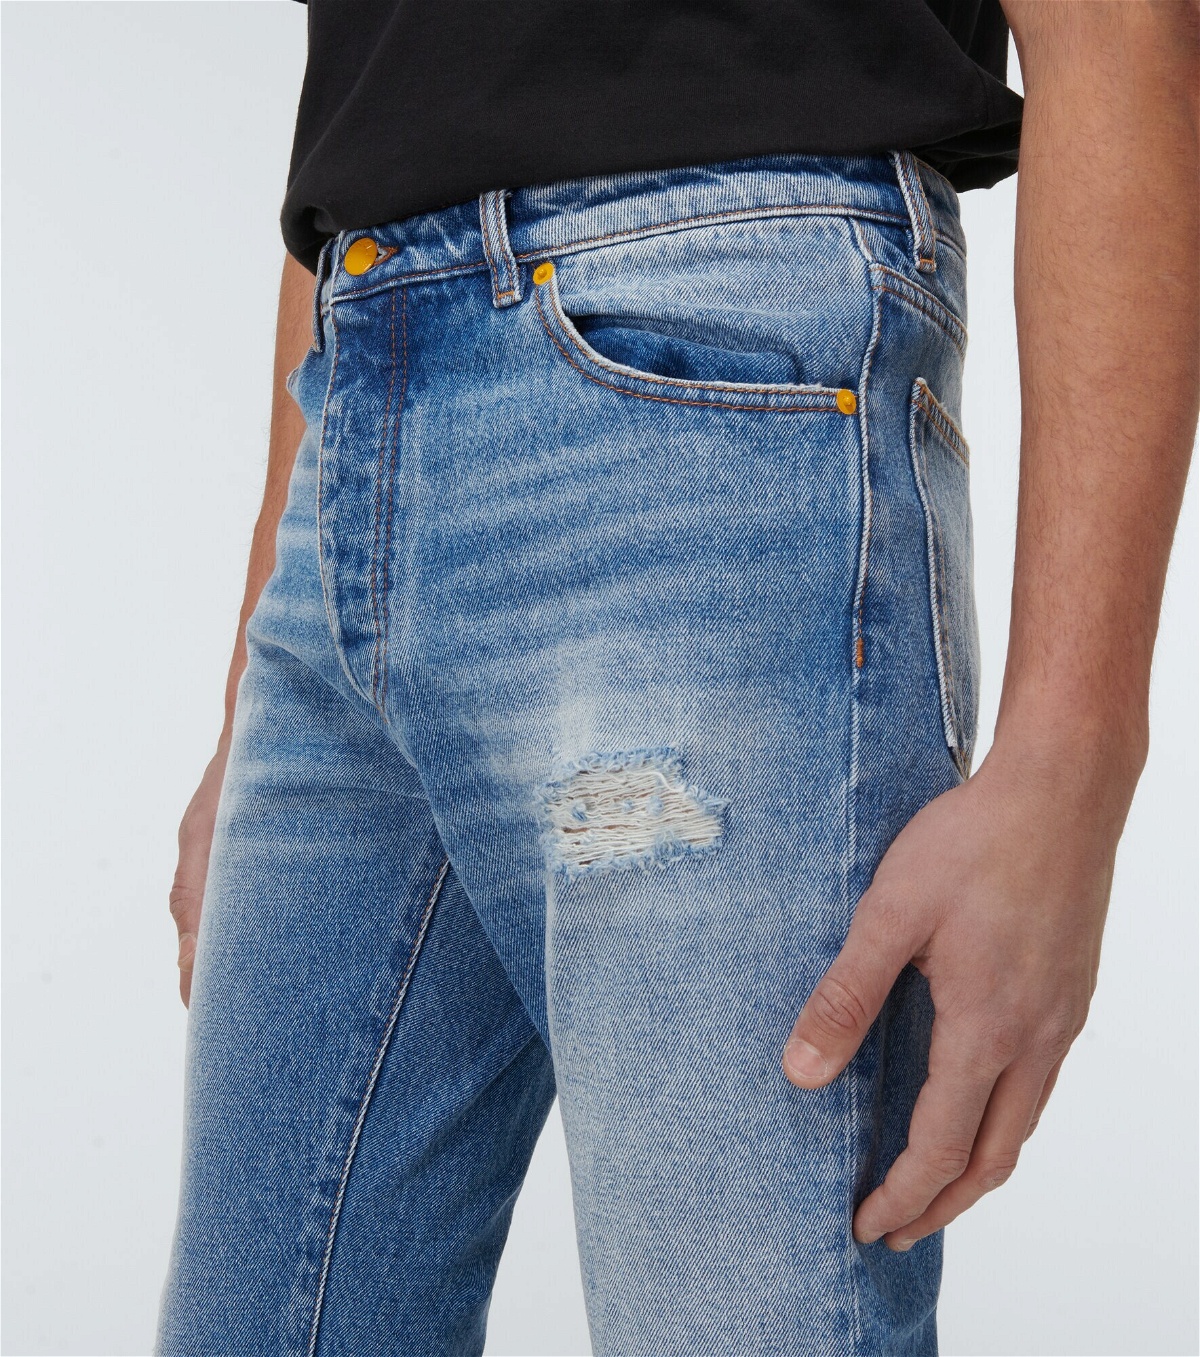 Moncler Genius - Distressed slim-leg jeans Moncler Genius